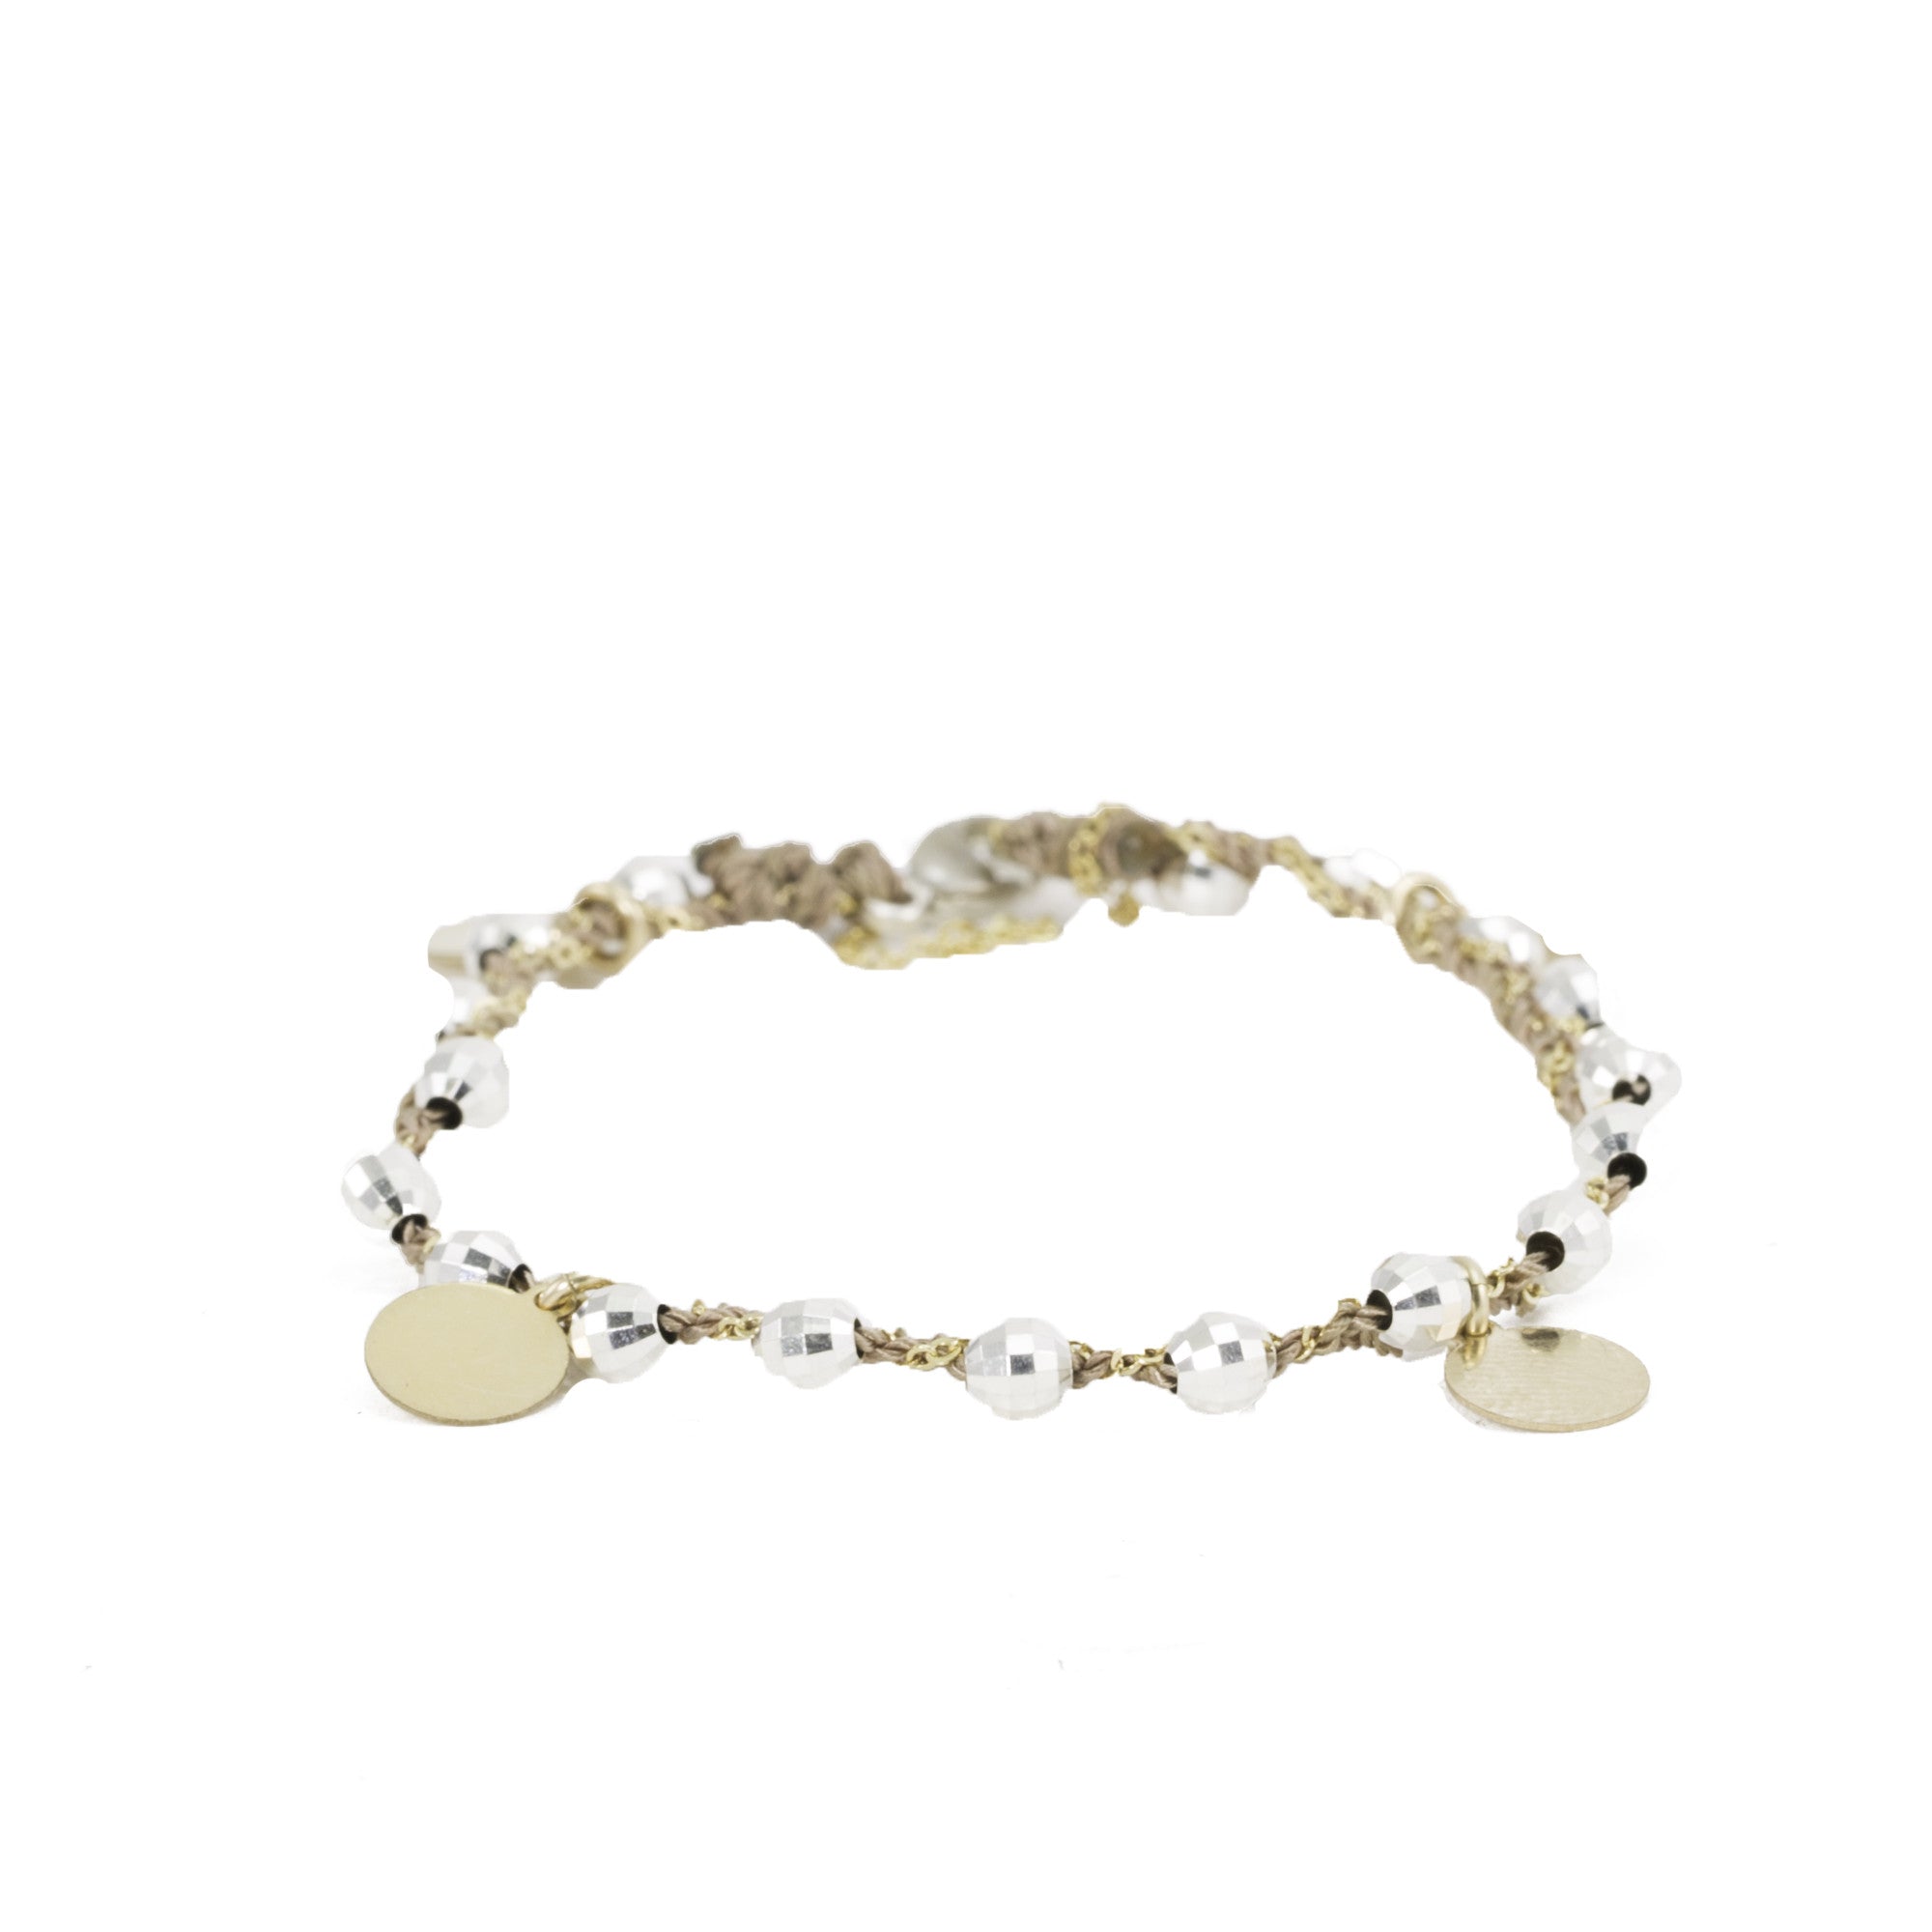 Silver Beads & Discs Bracelet